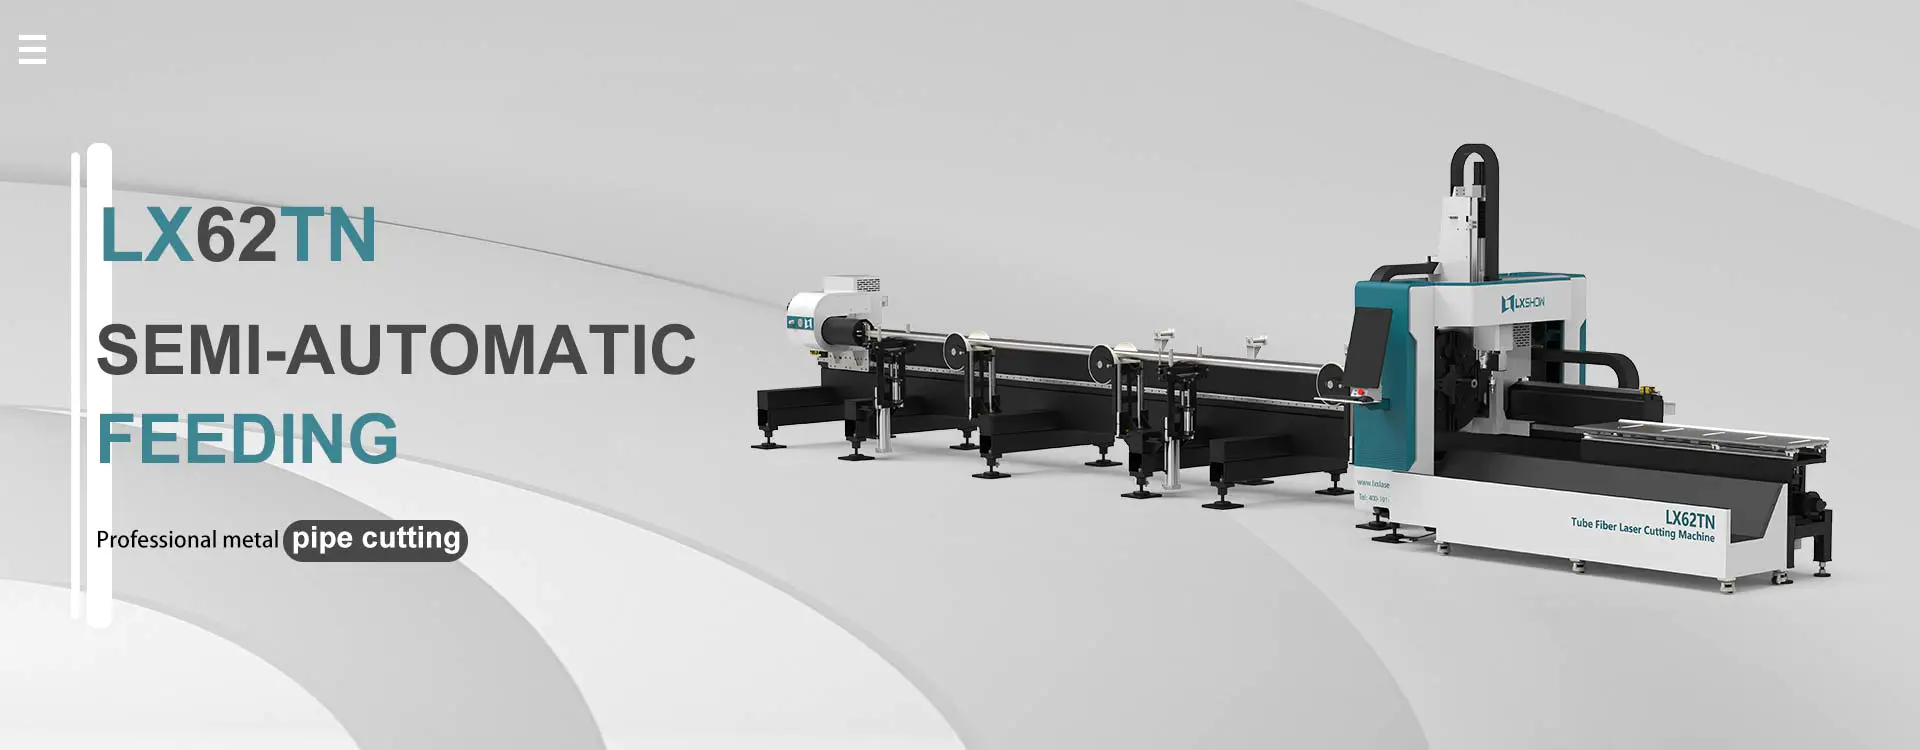 product-Lxshow-Metal Tube Fiber Laser Cutting Machine 62TN Semi-Automactic Feeding-img